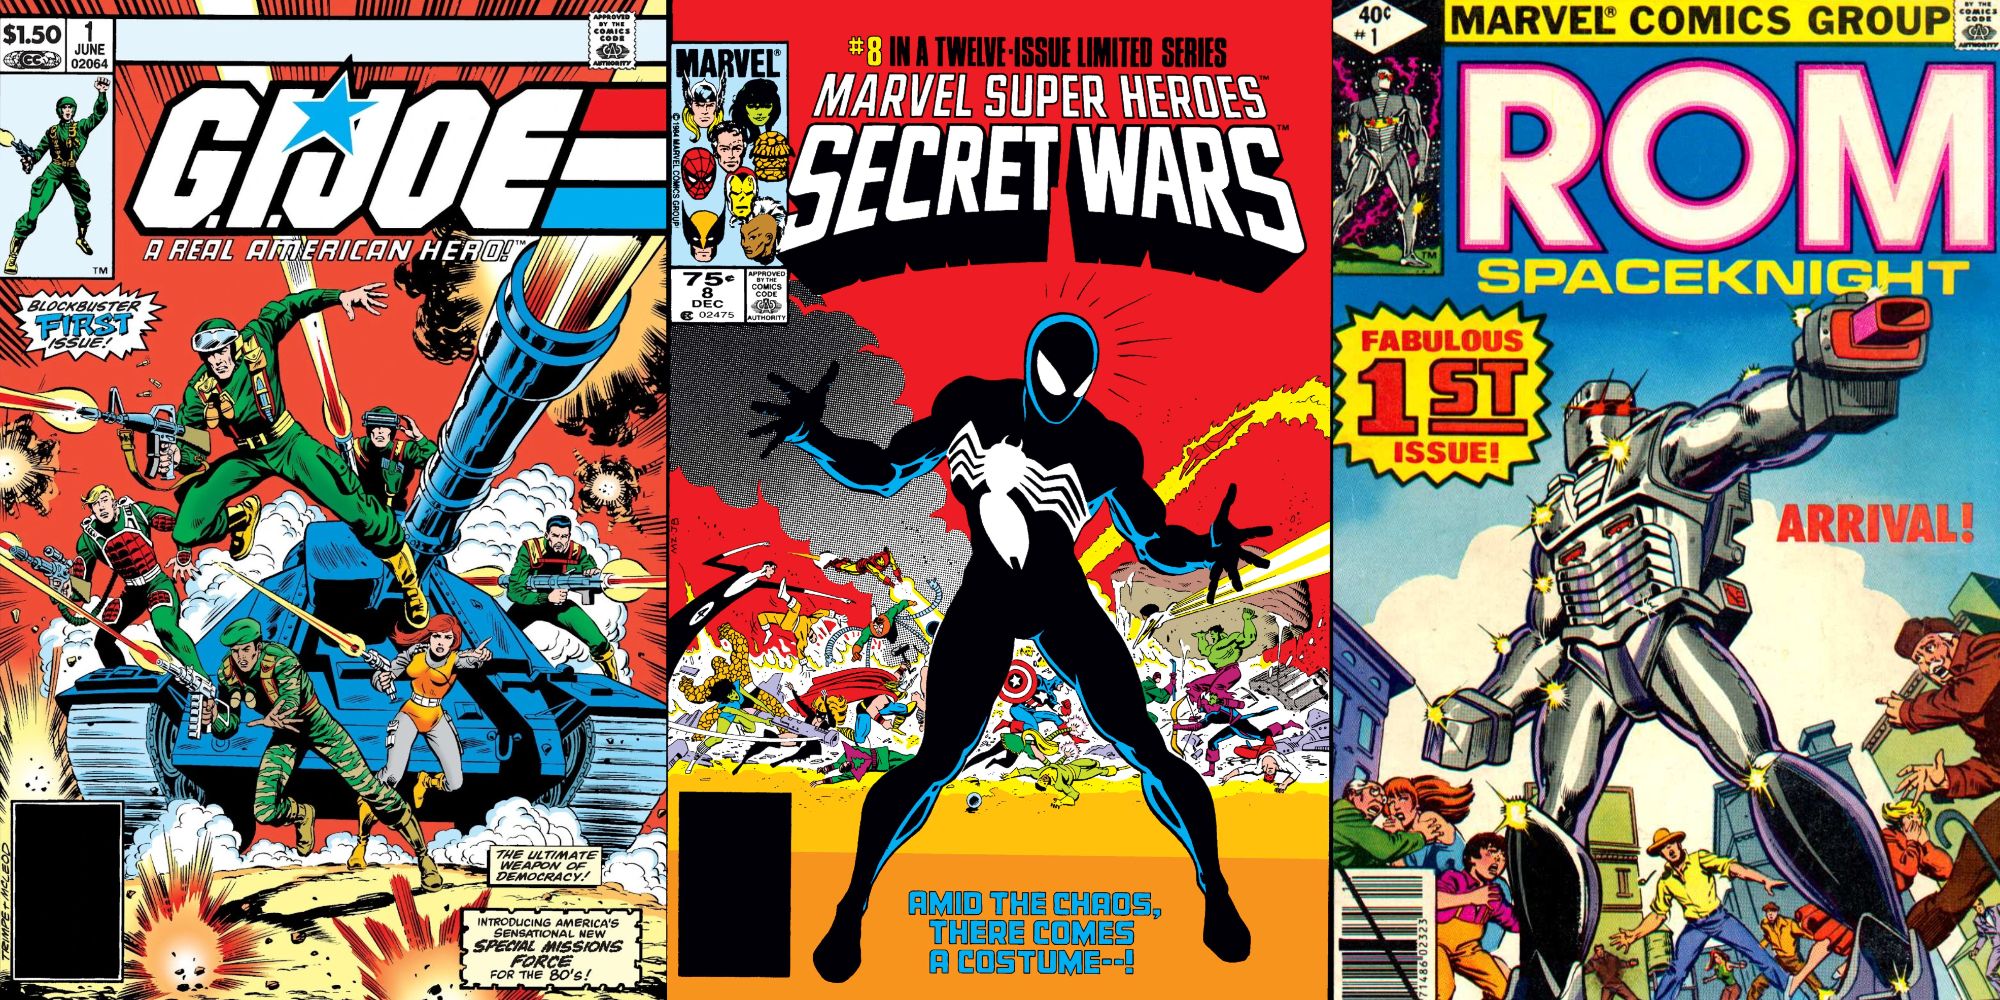 Split image of G.I. Joe #1, Secret Wars #8, and Rom: Spaceknight #1 from Marvel Comics.